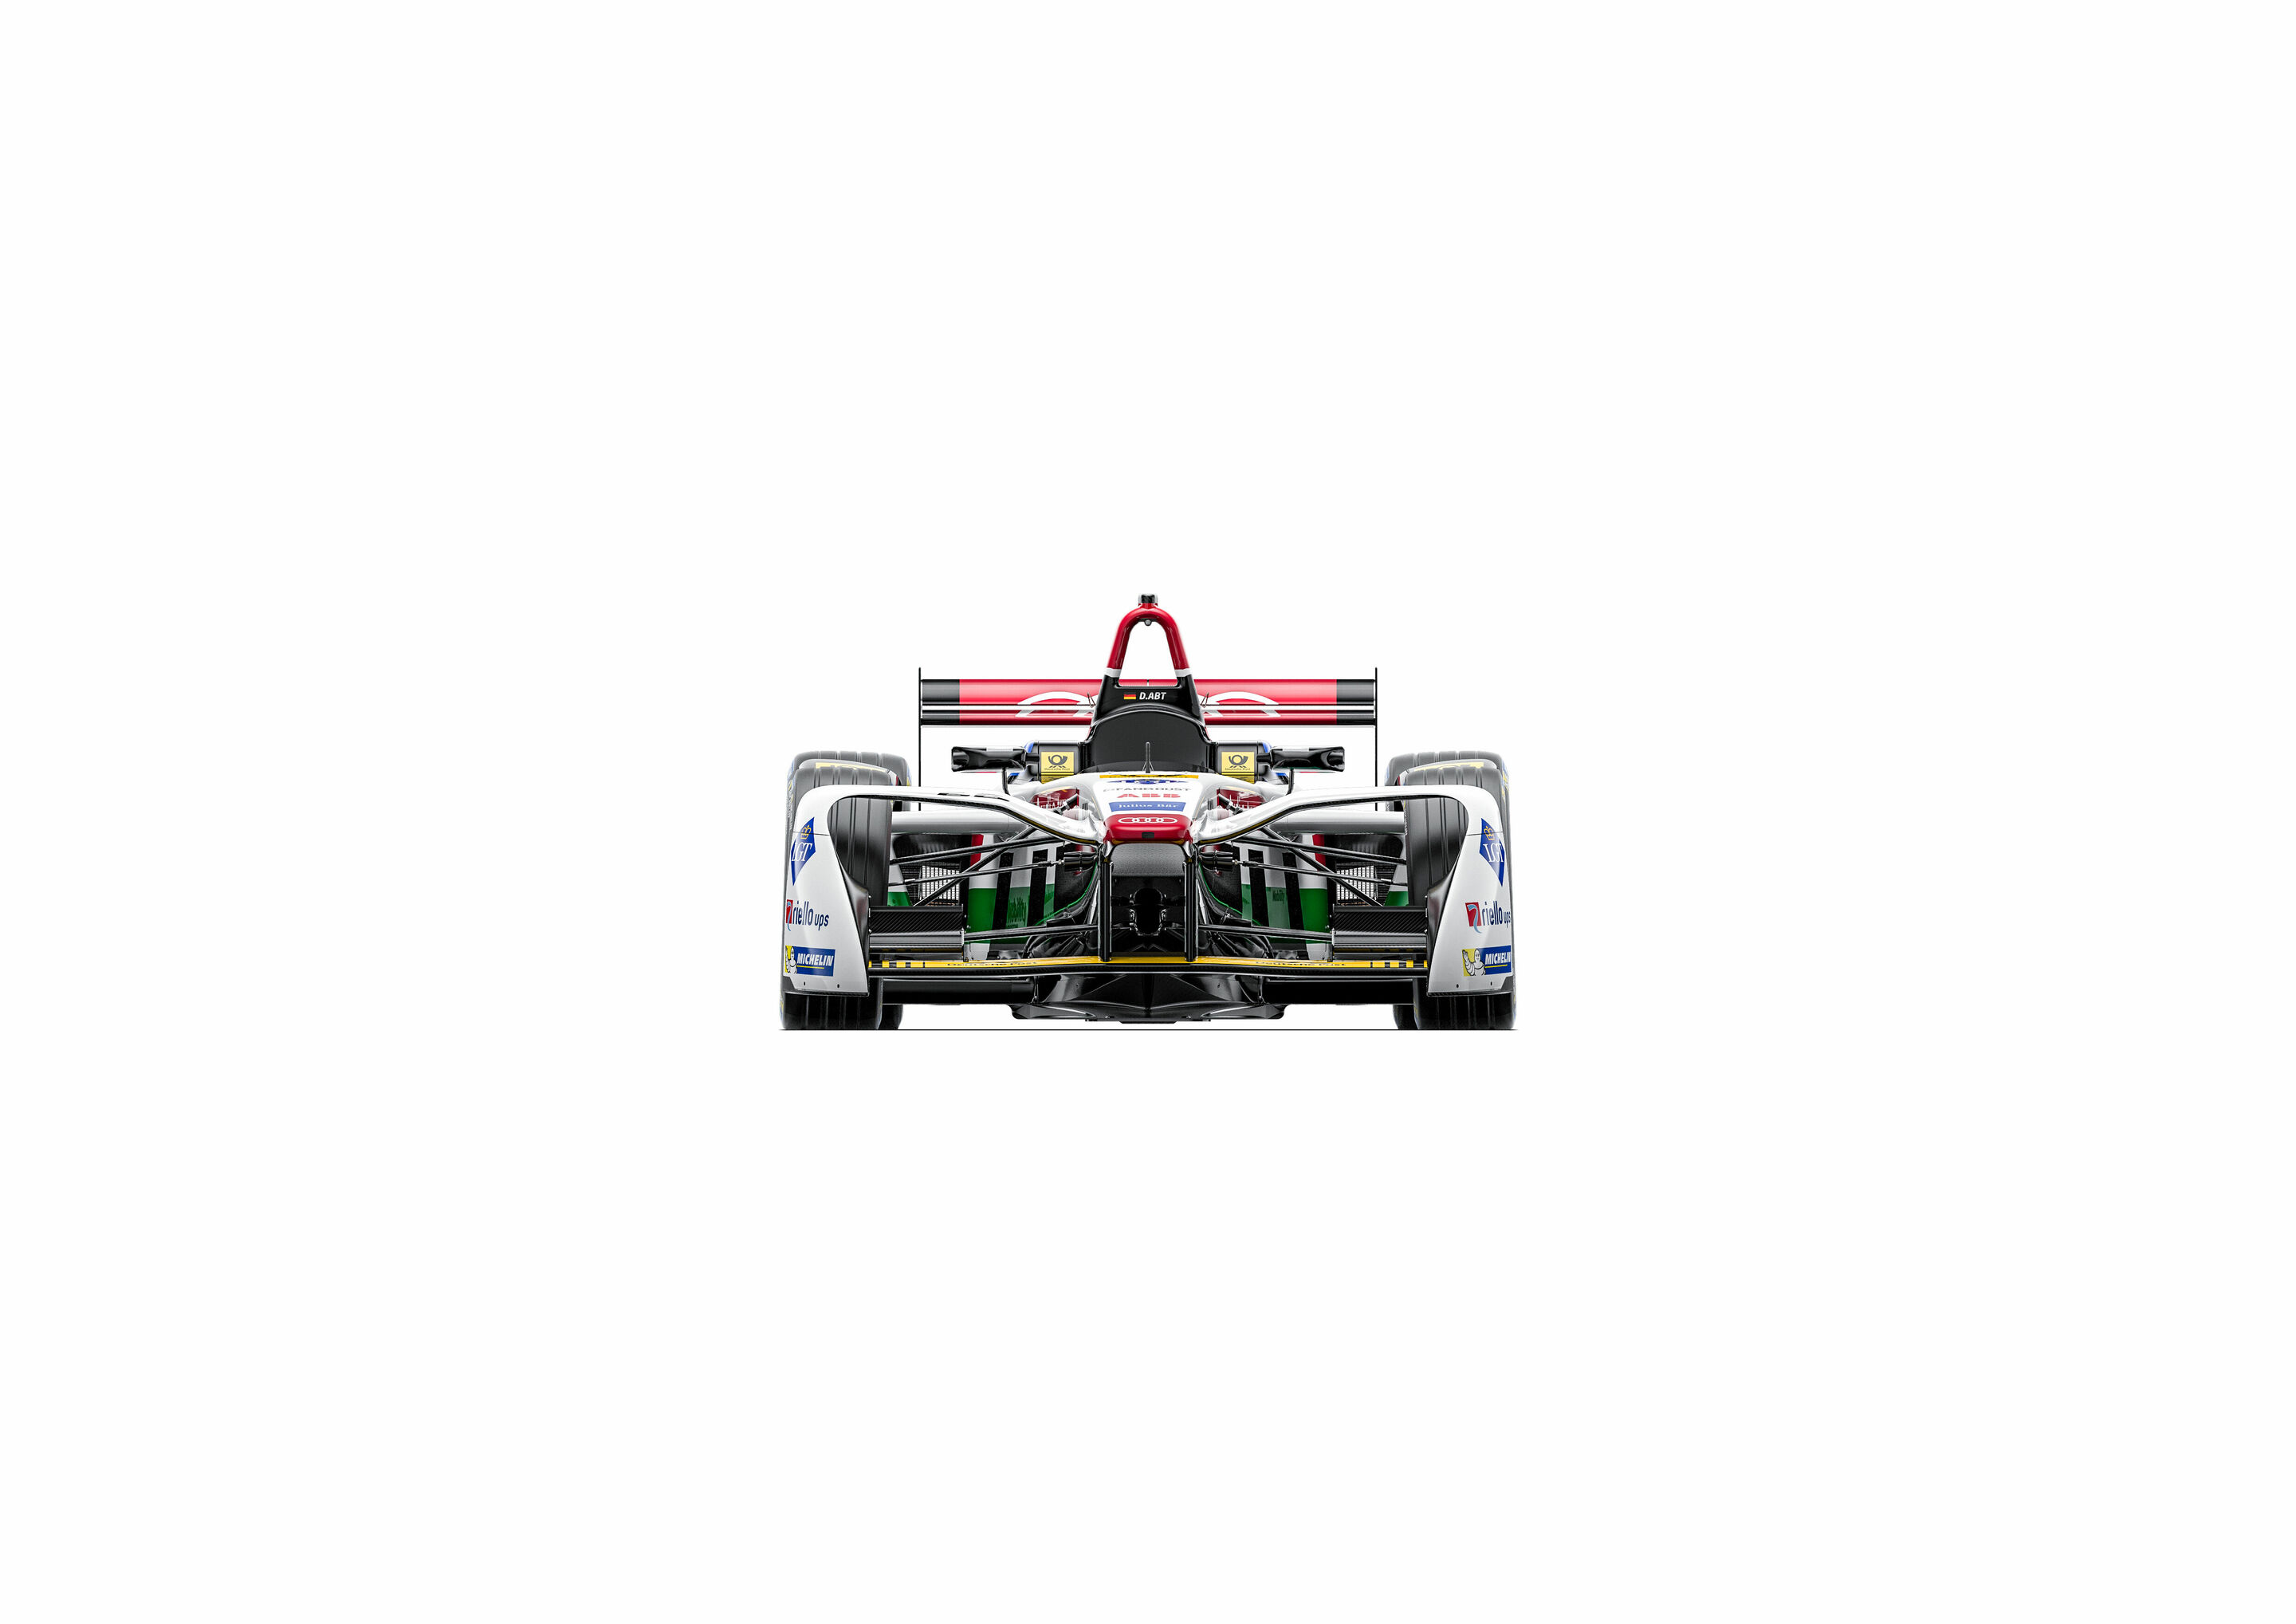 Audi Formula E Team Presentation